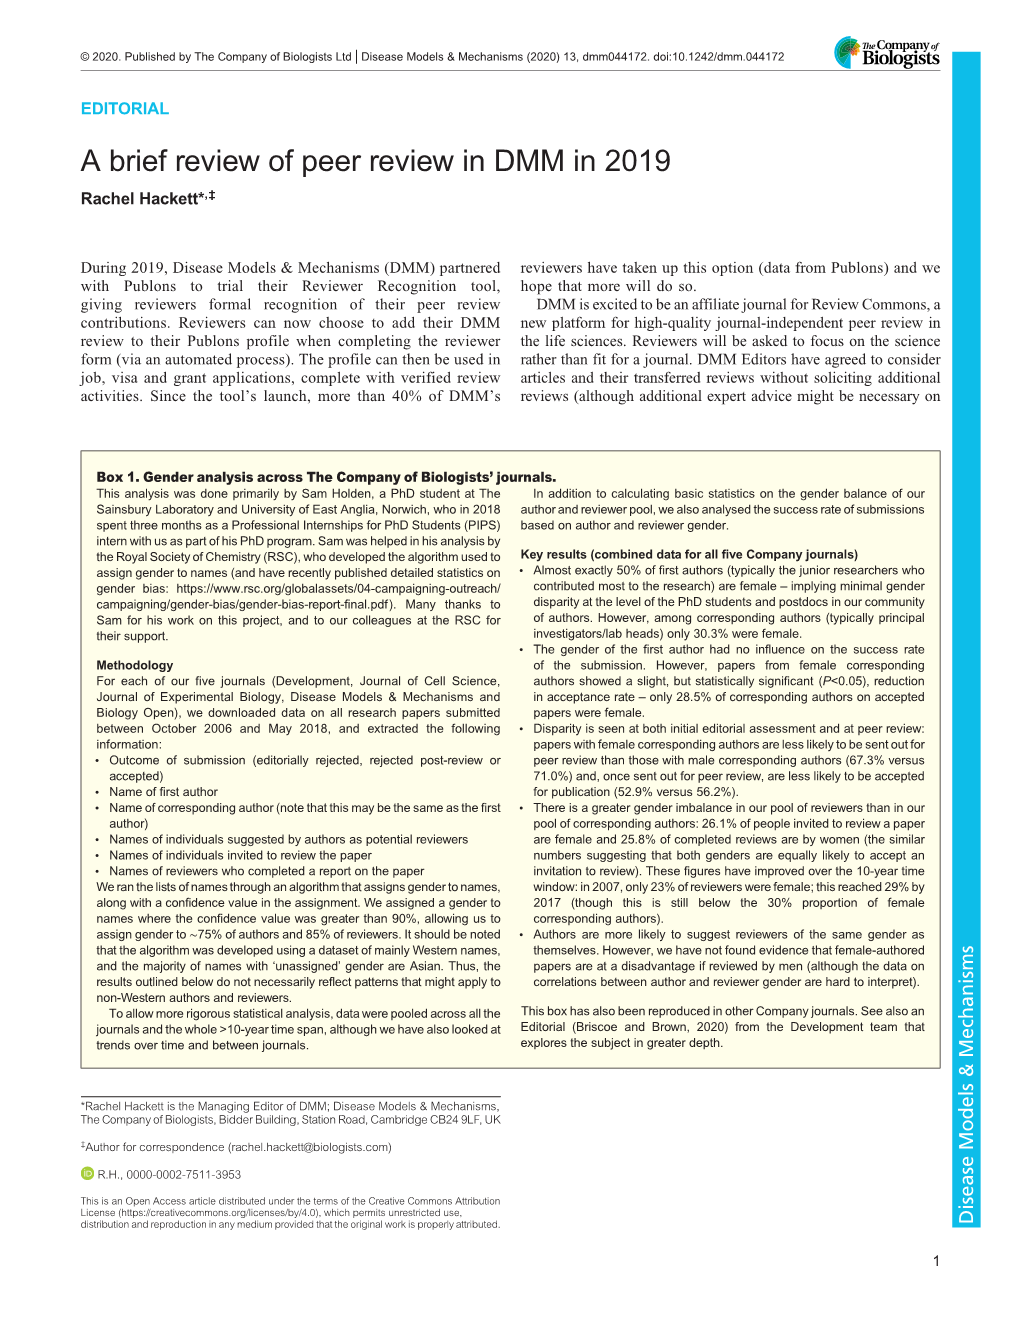 A Brief Review of Peer Review in DMM in 2019 Rachel Hackett*,‡